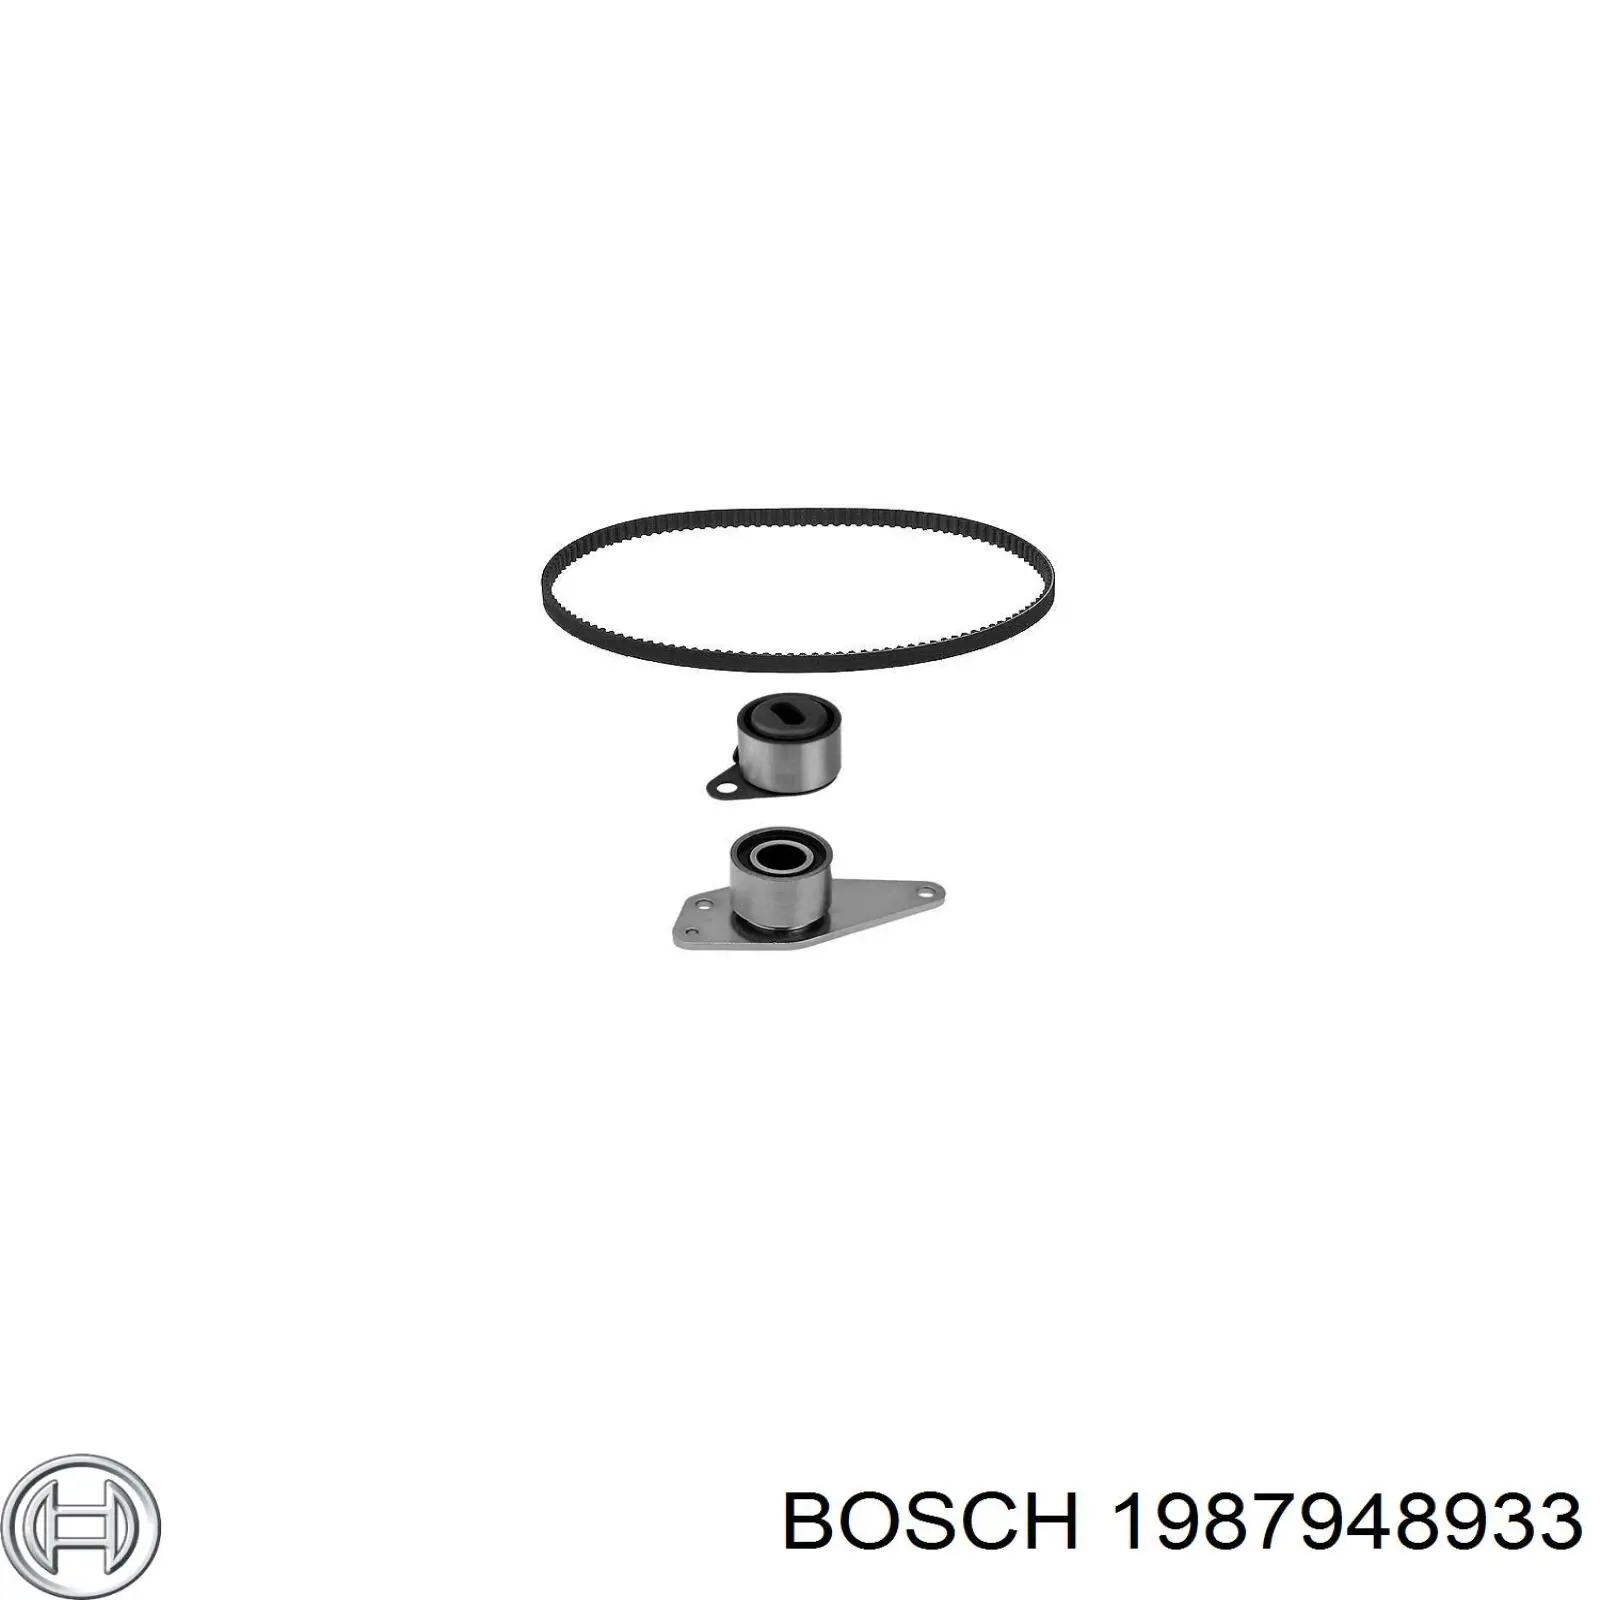 1987948933 Bosch kit de correa de distribución